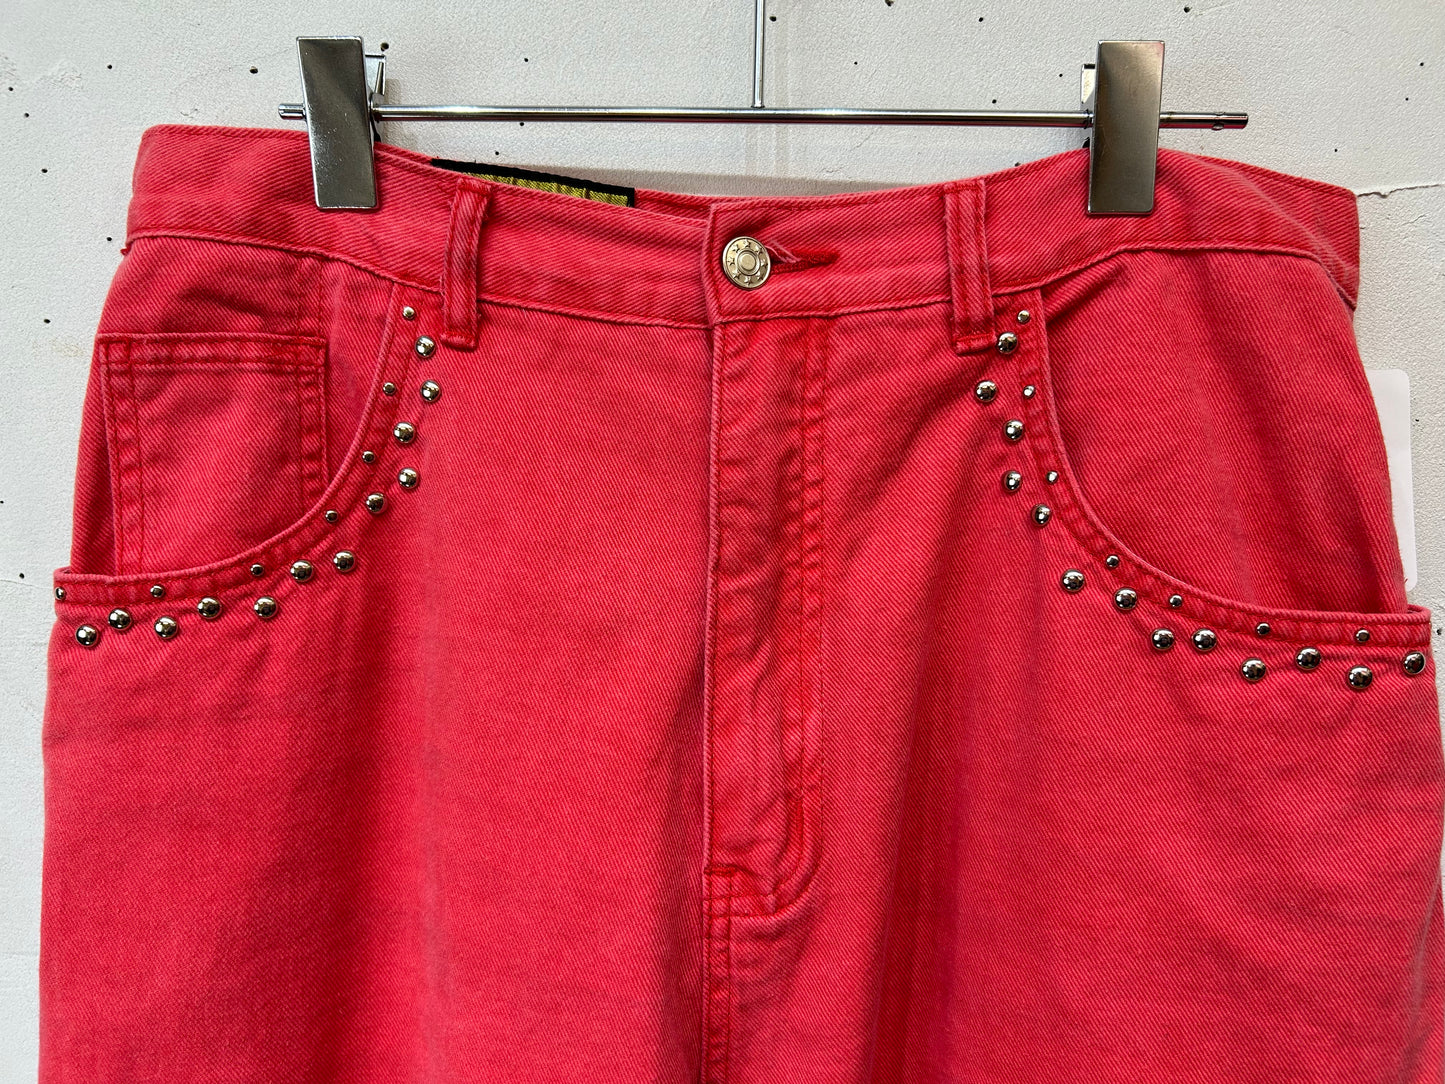 Vintage Denim Pants  〜 SUNNY STYLE〜[E26423]